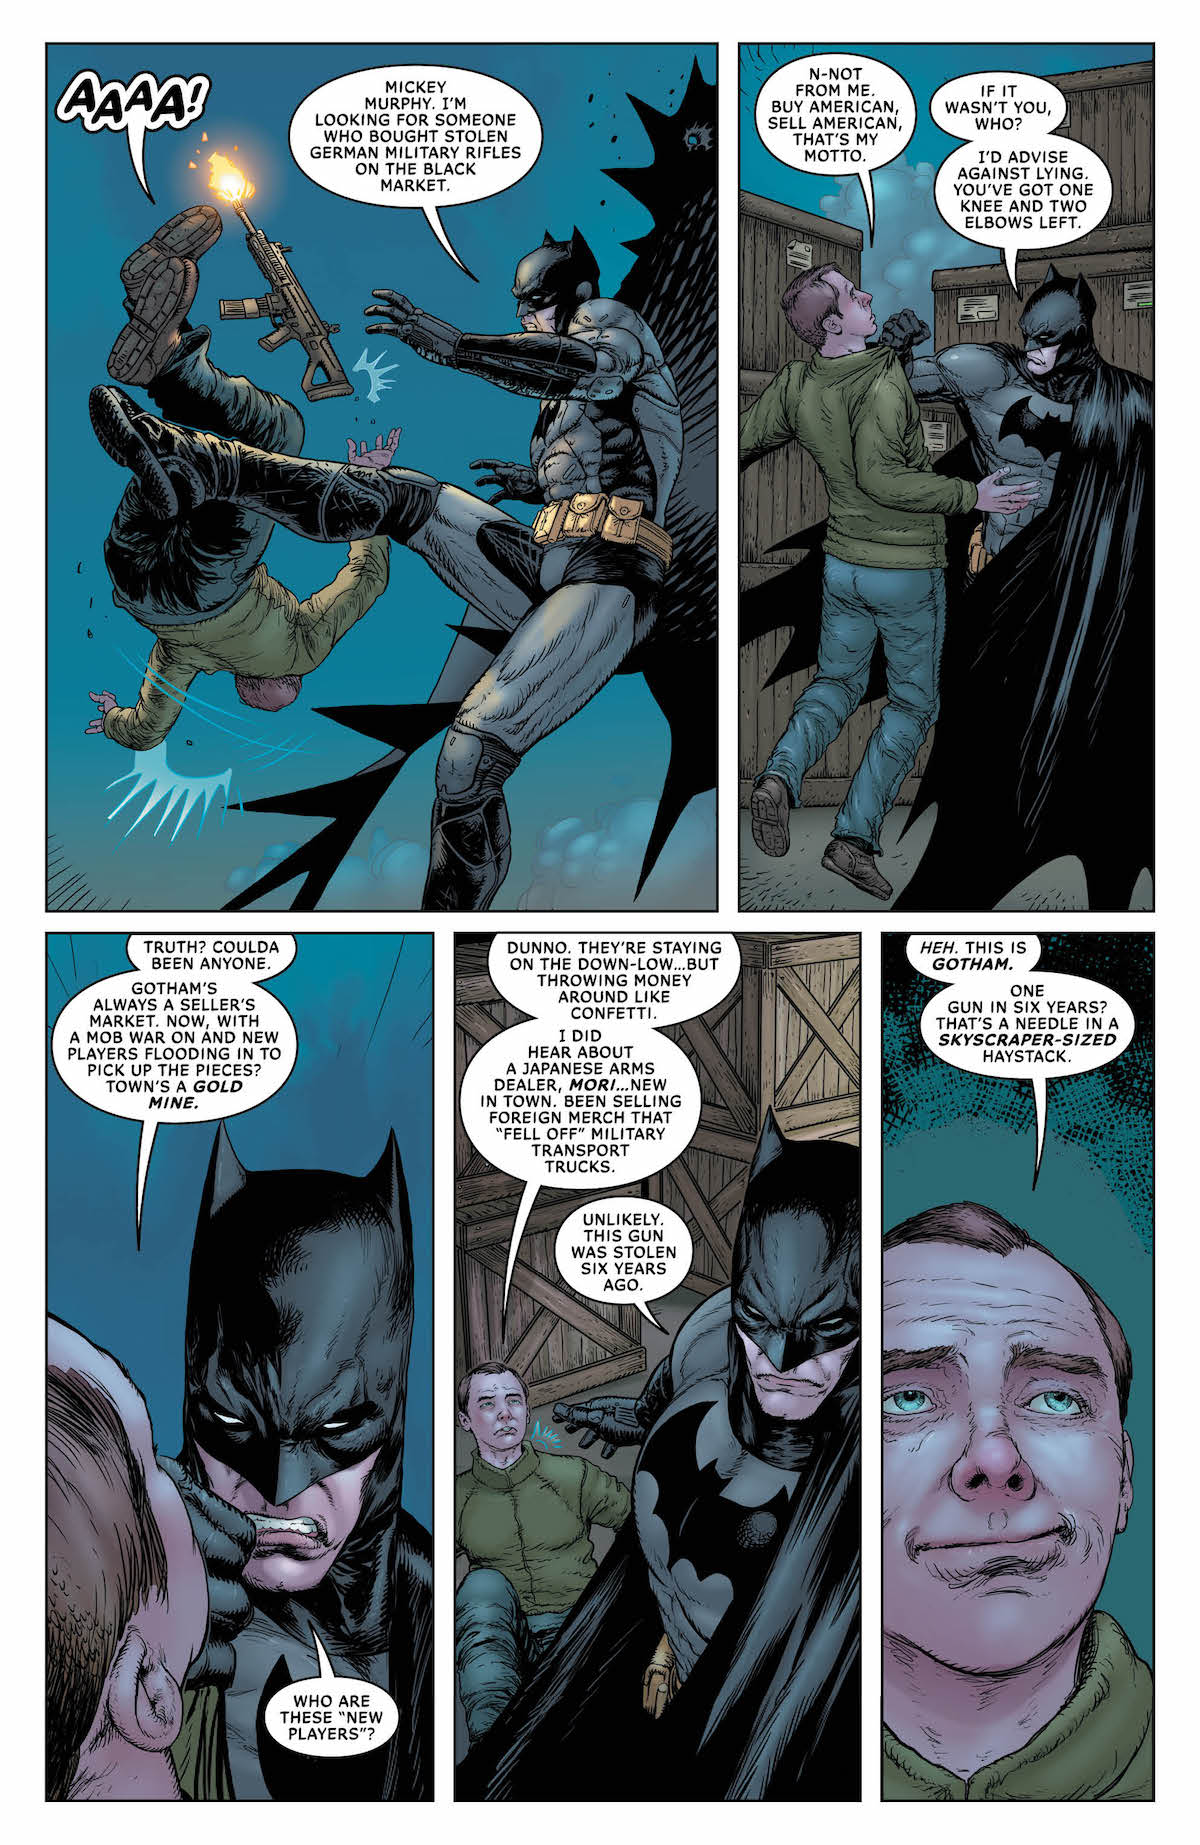 Batman Sins of the Father #2